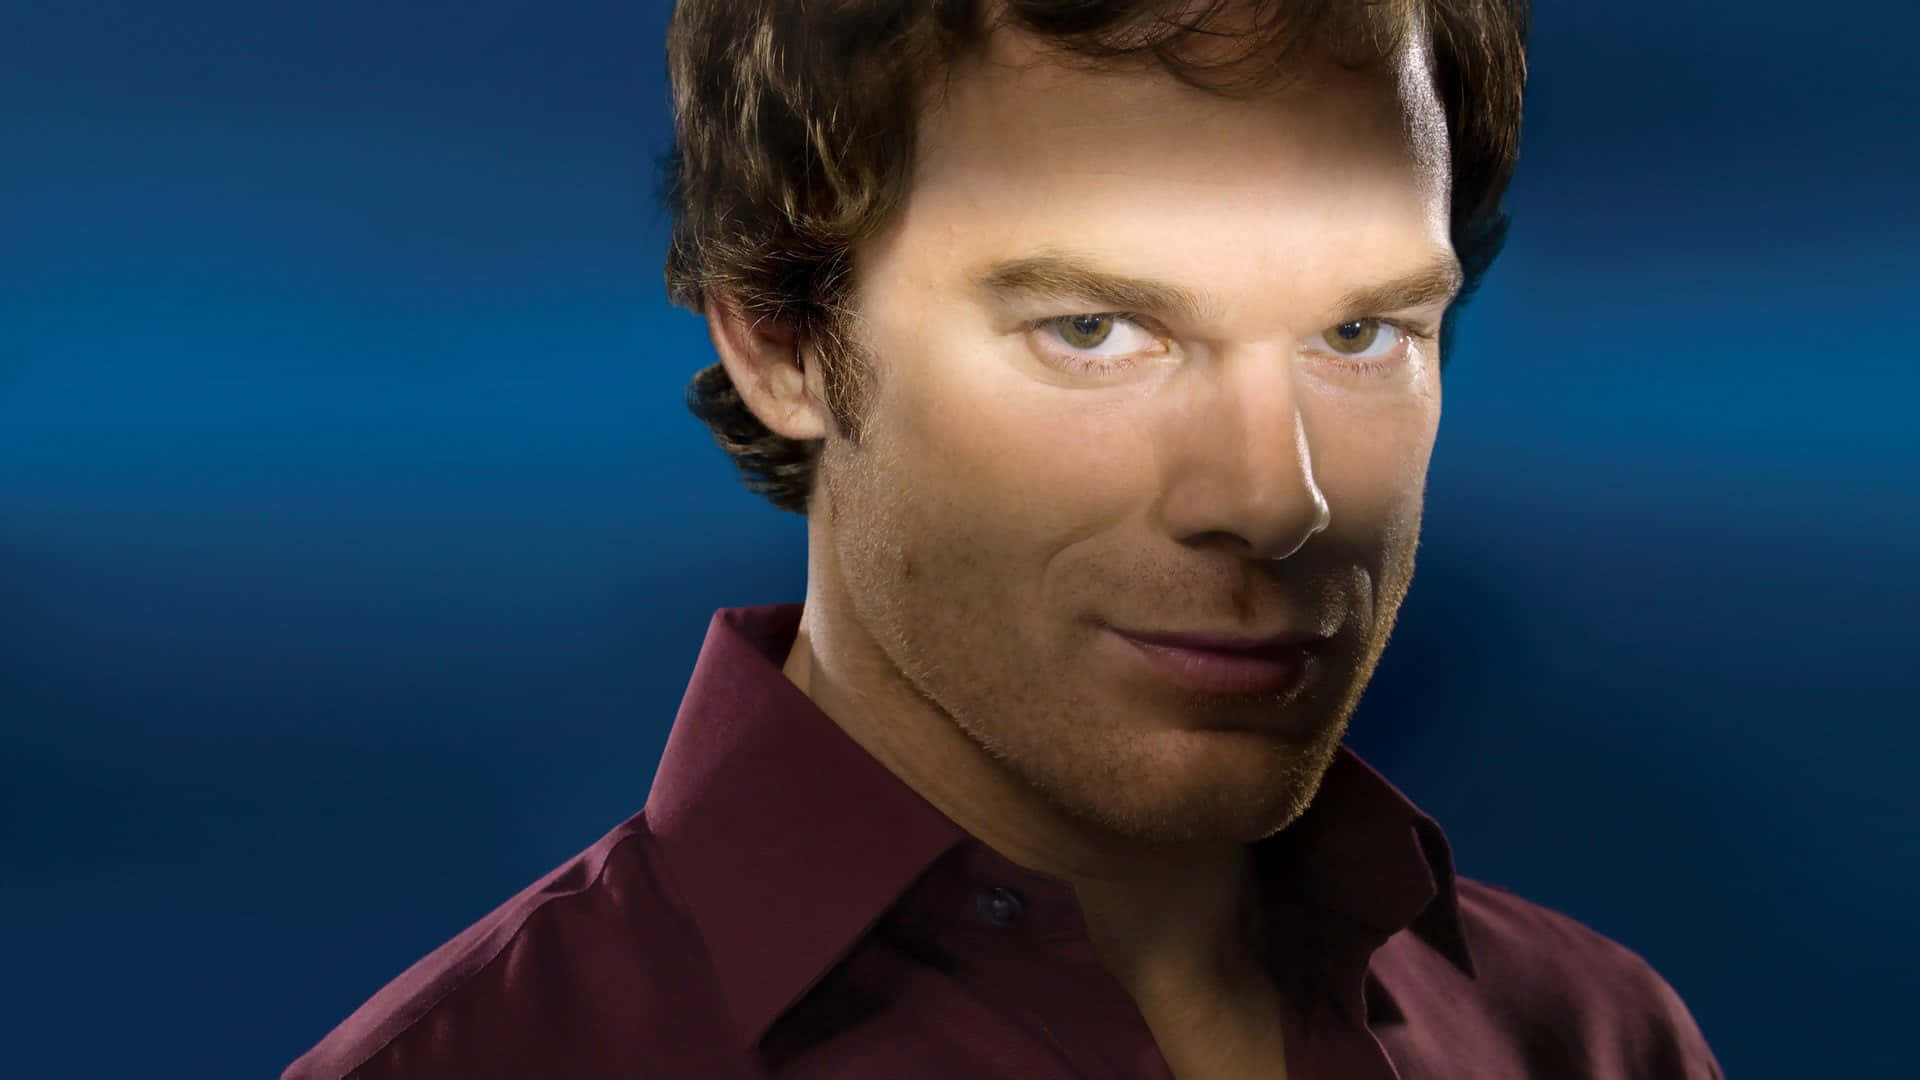 Michael C. Hall as Dexter Morgan in "Dexter" Wallpaper